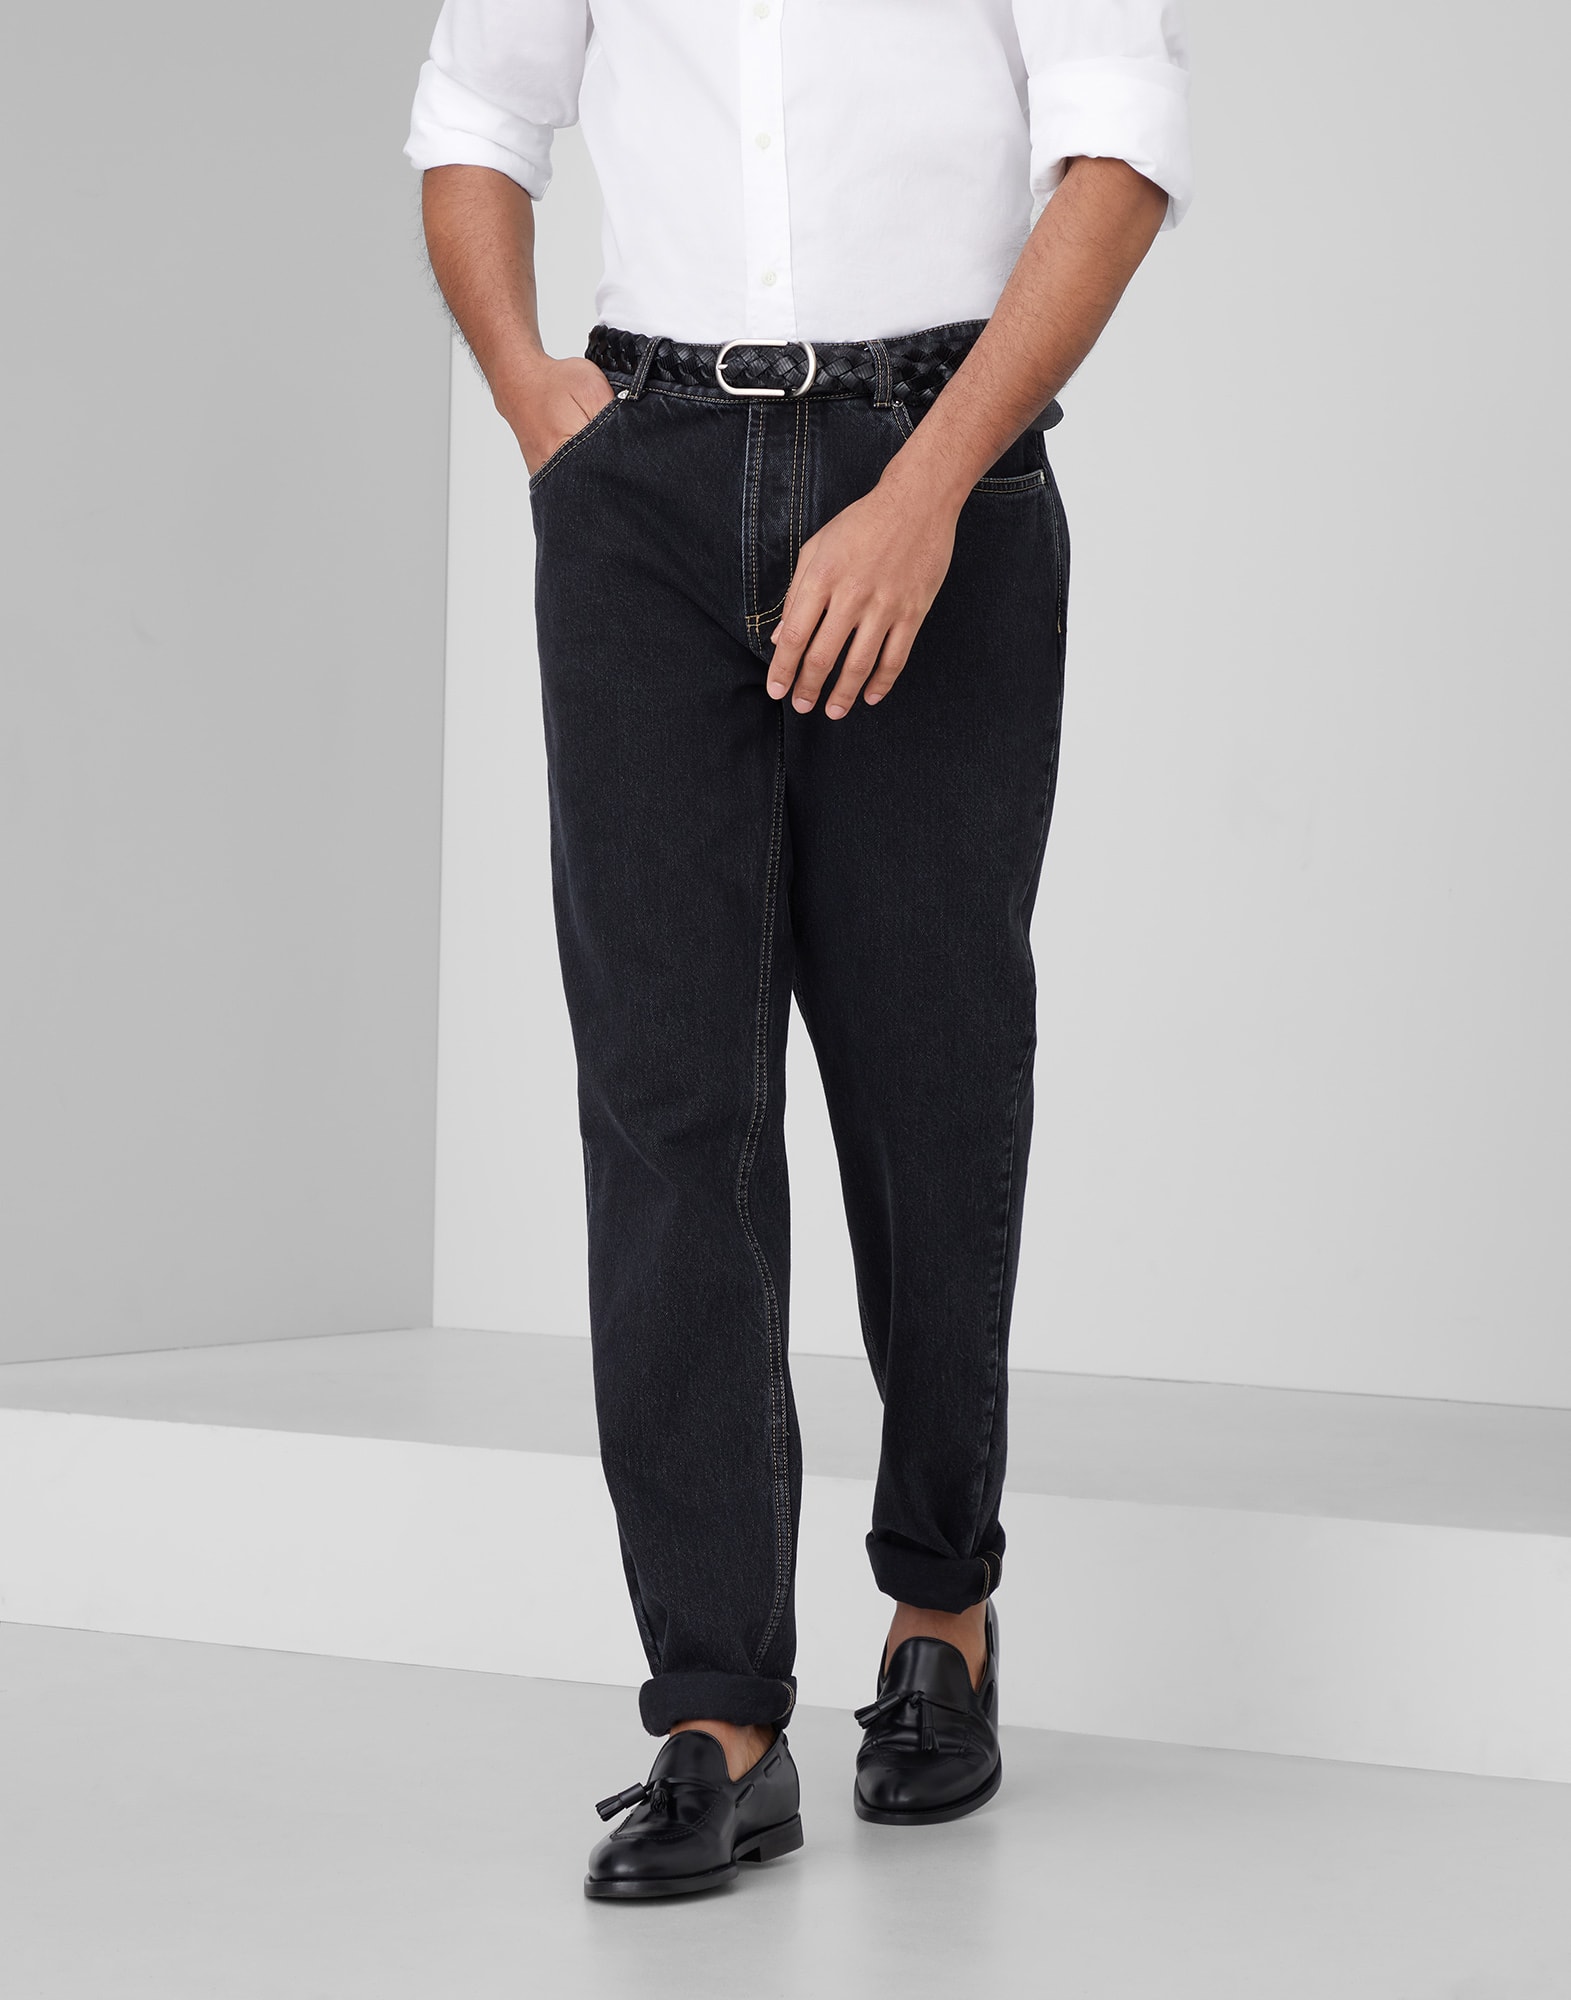 Denim Five-Pocket Trousers - Front view